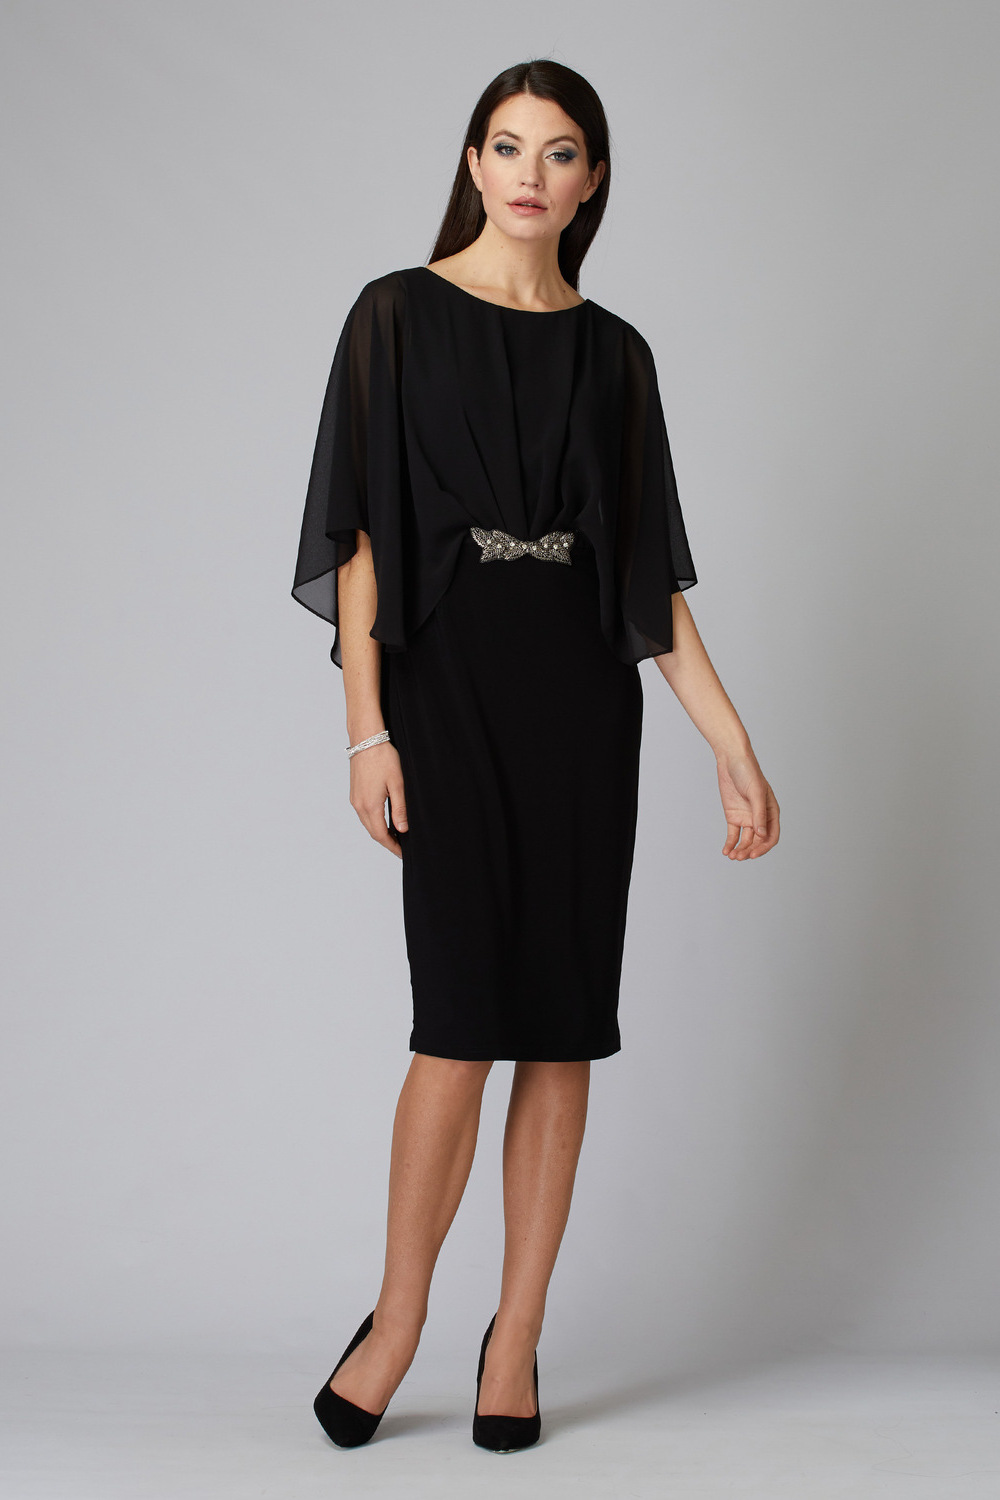 Joseph Ribkoff Dress Style 194208 . Black